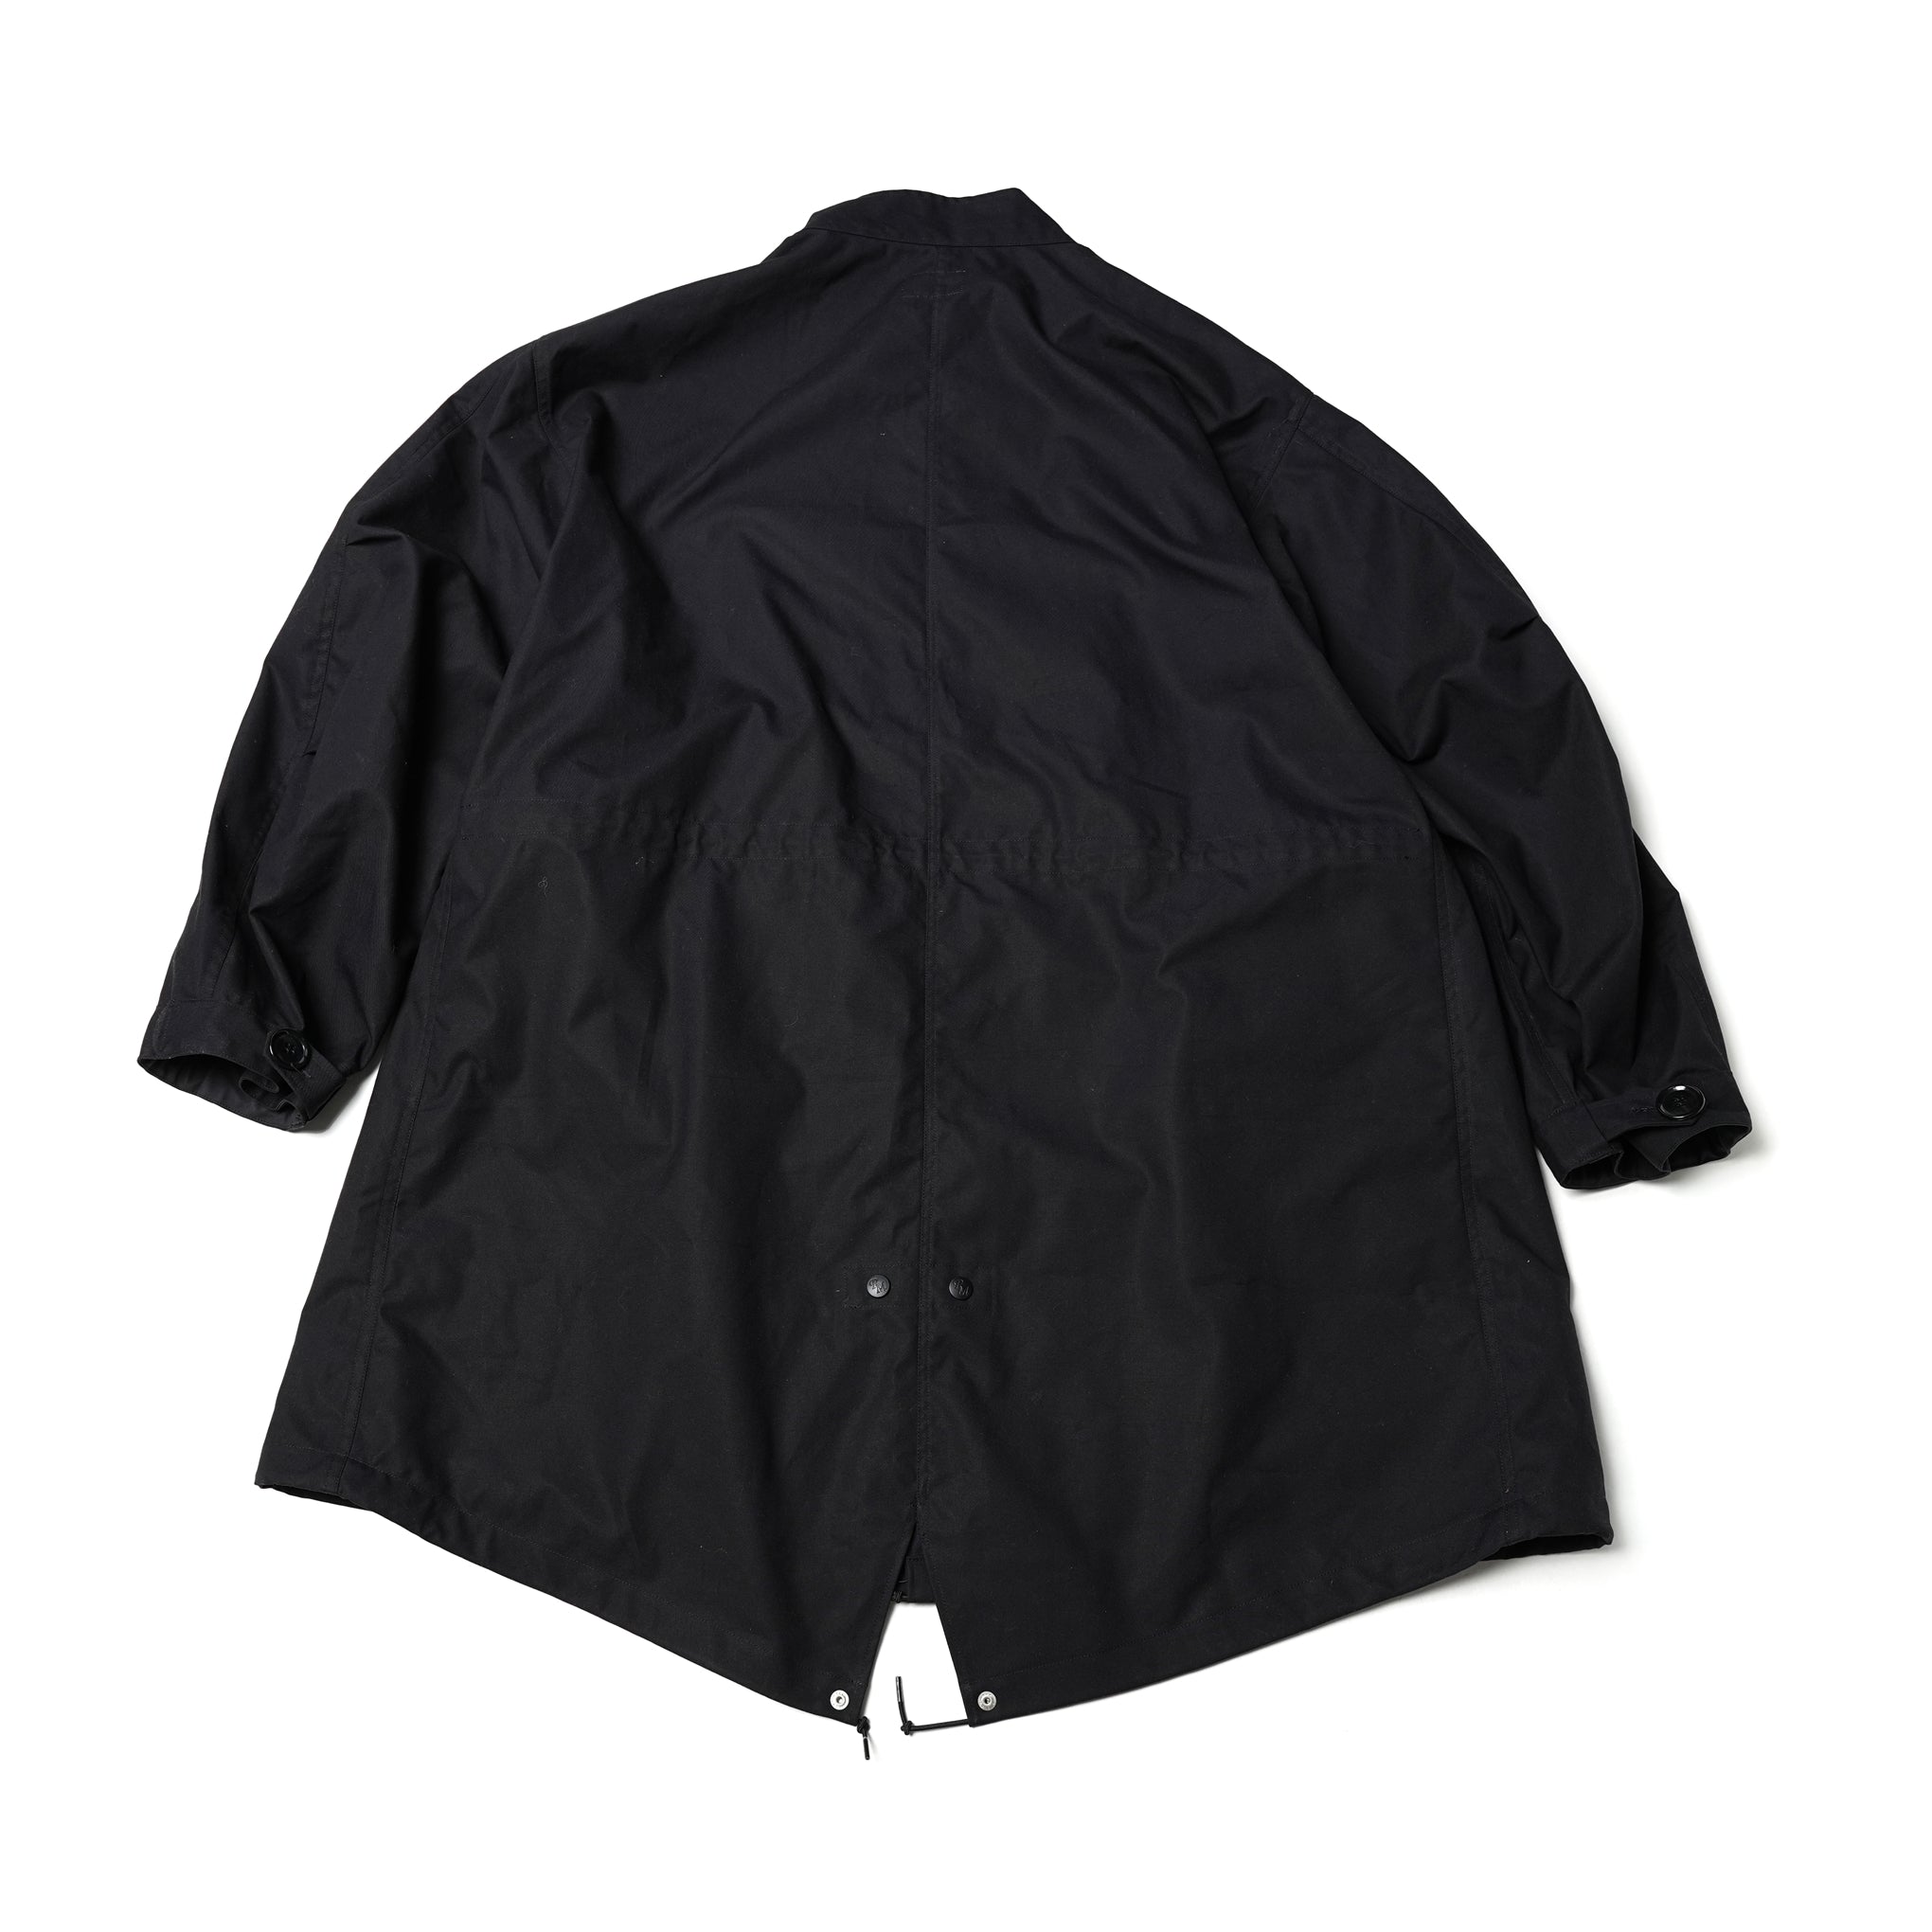 No:PH23FW-008 | Name:P.H. M. BM S.WAX CLOTH MODS COAT | Color:Black【POWDERHORN MOUNTAINEERING_パウダーホーンマウンテニアリング】【入荷予定アイテム・入荷連絡可能】